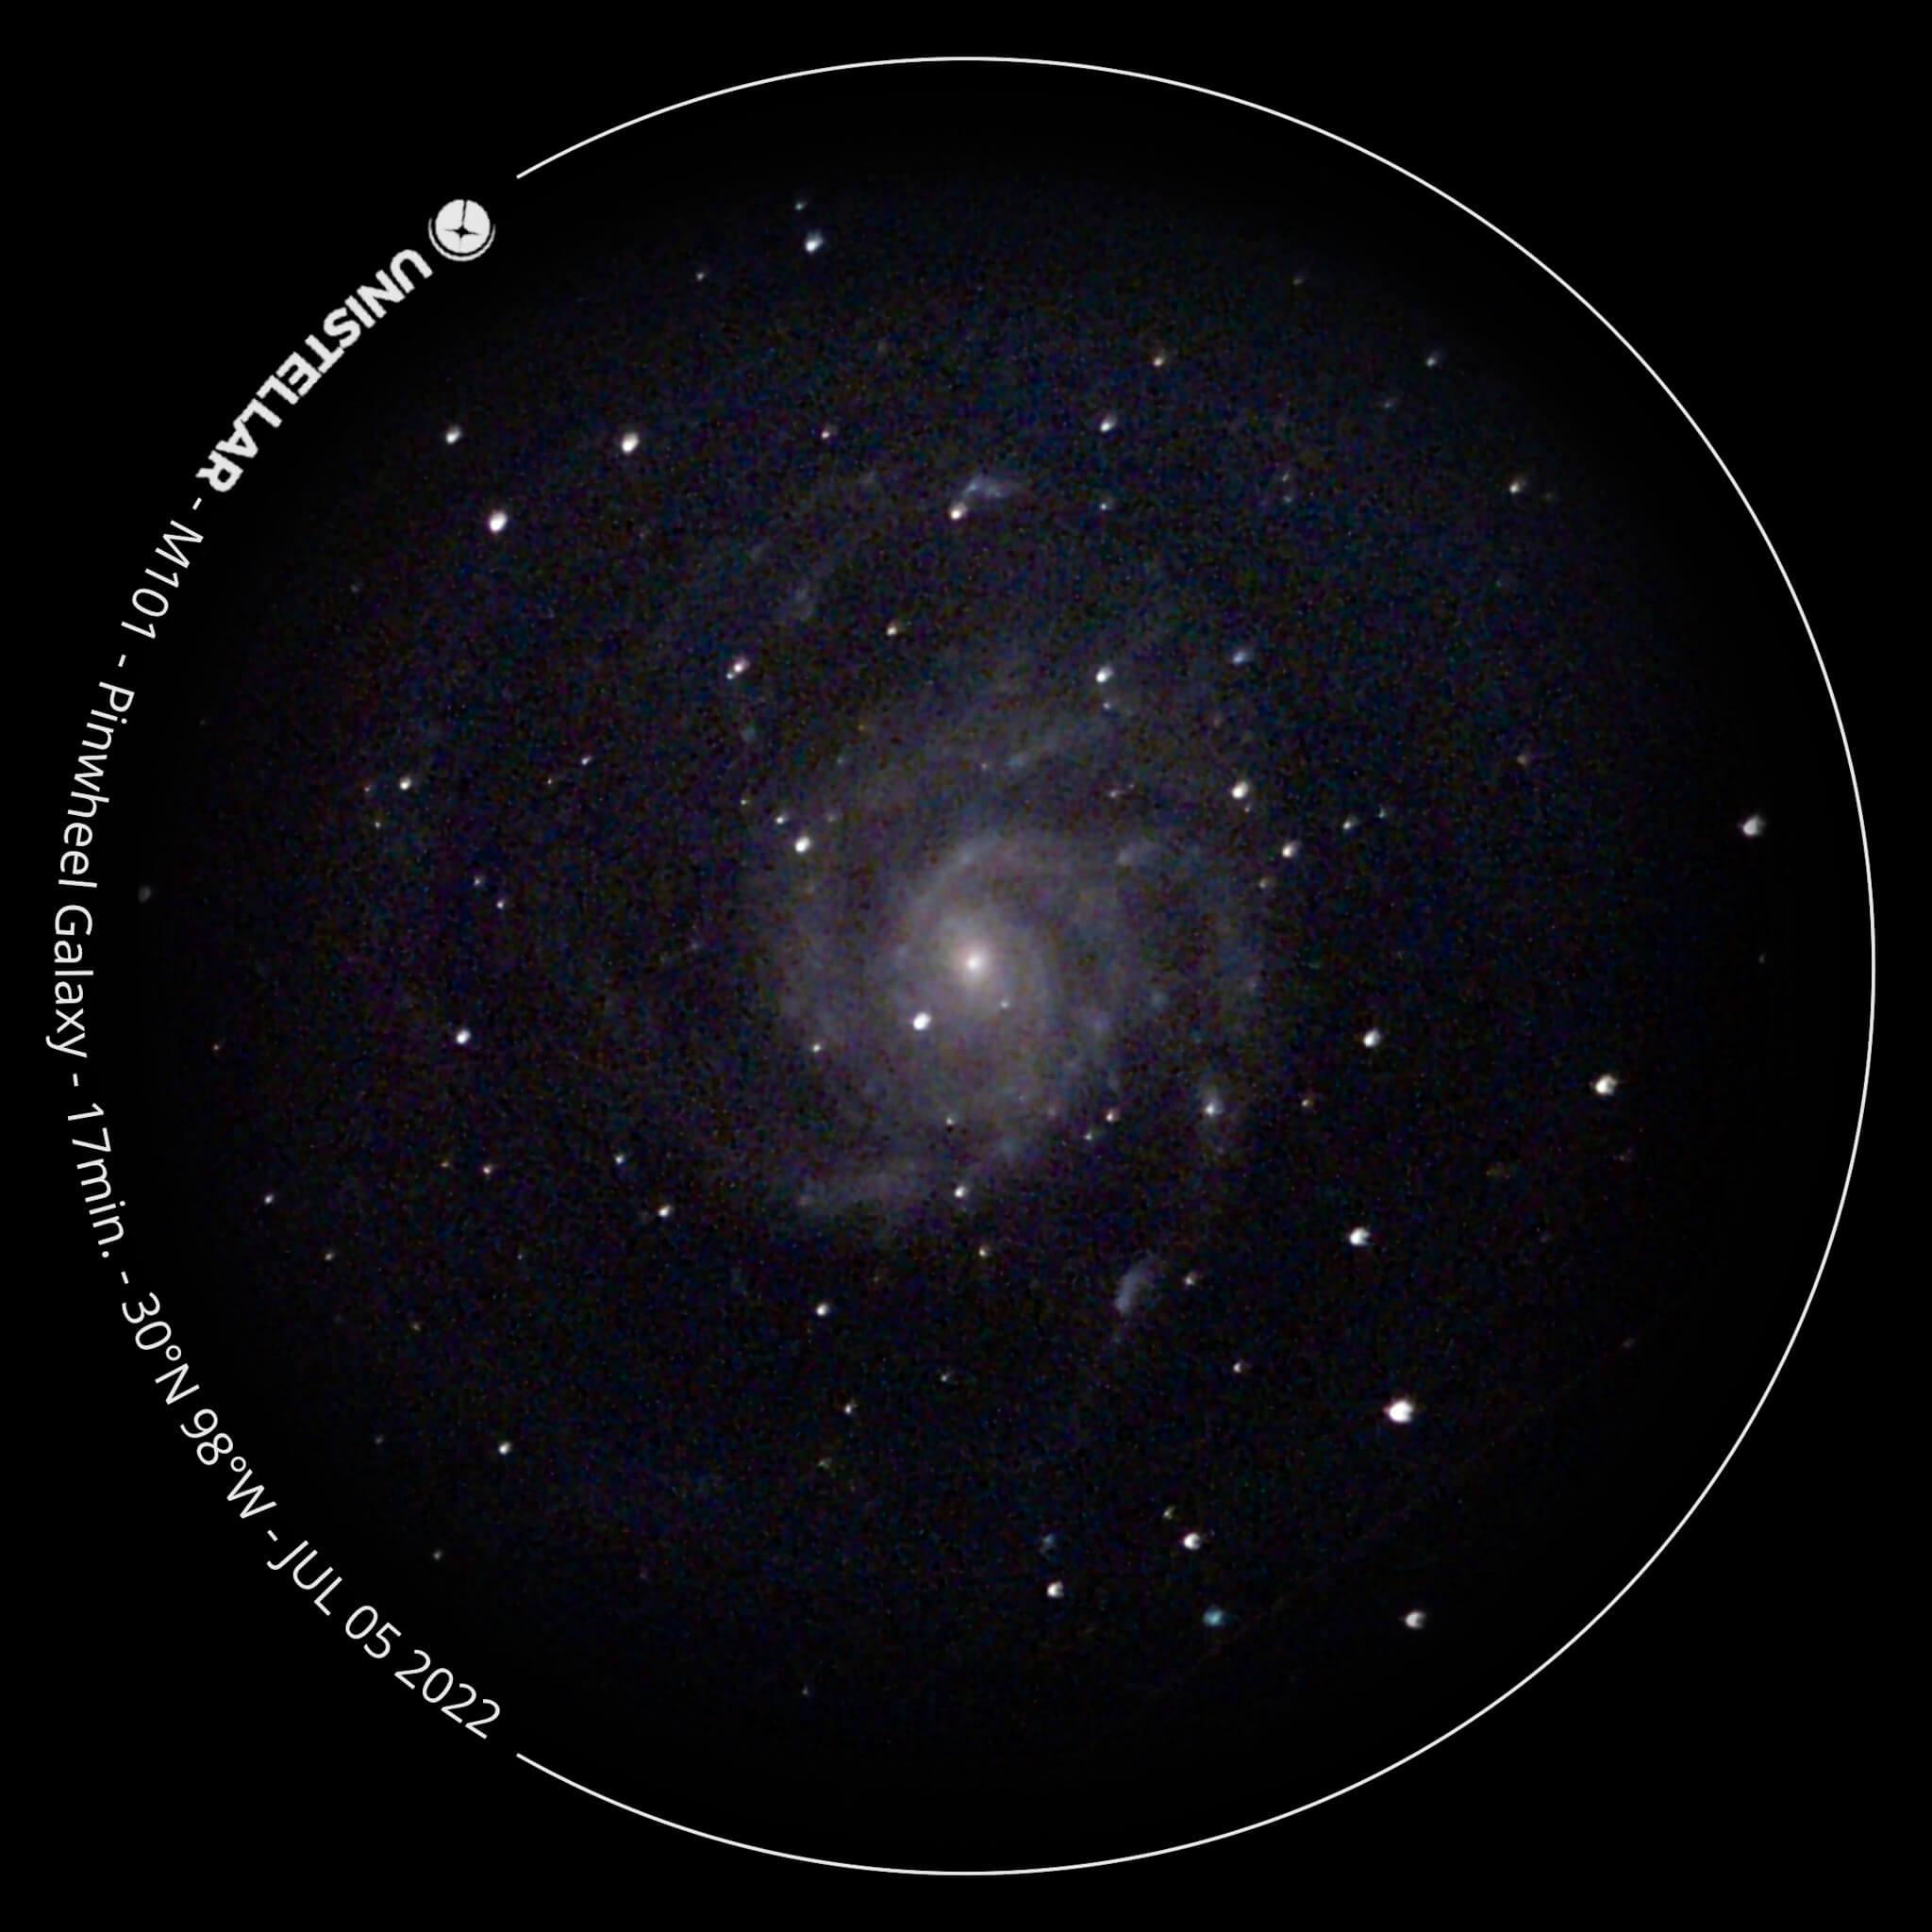 Supernova in the Pinwheel Galaxy image